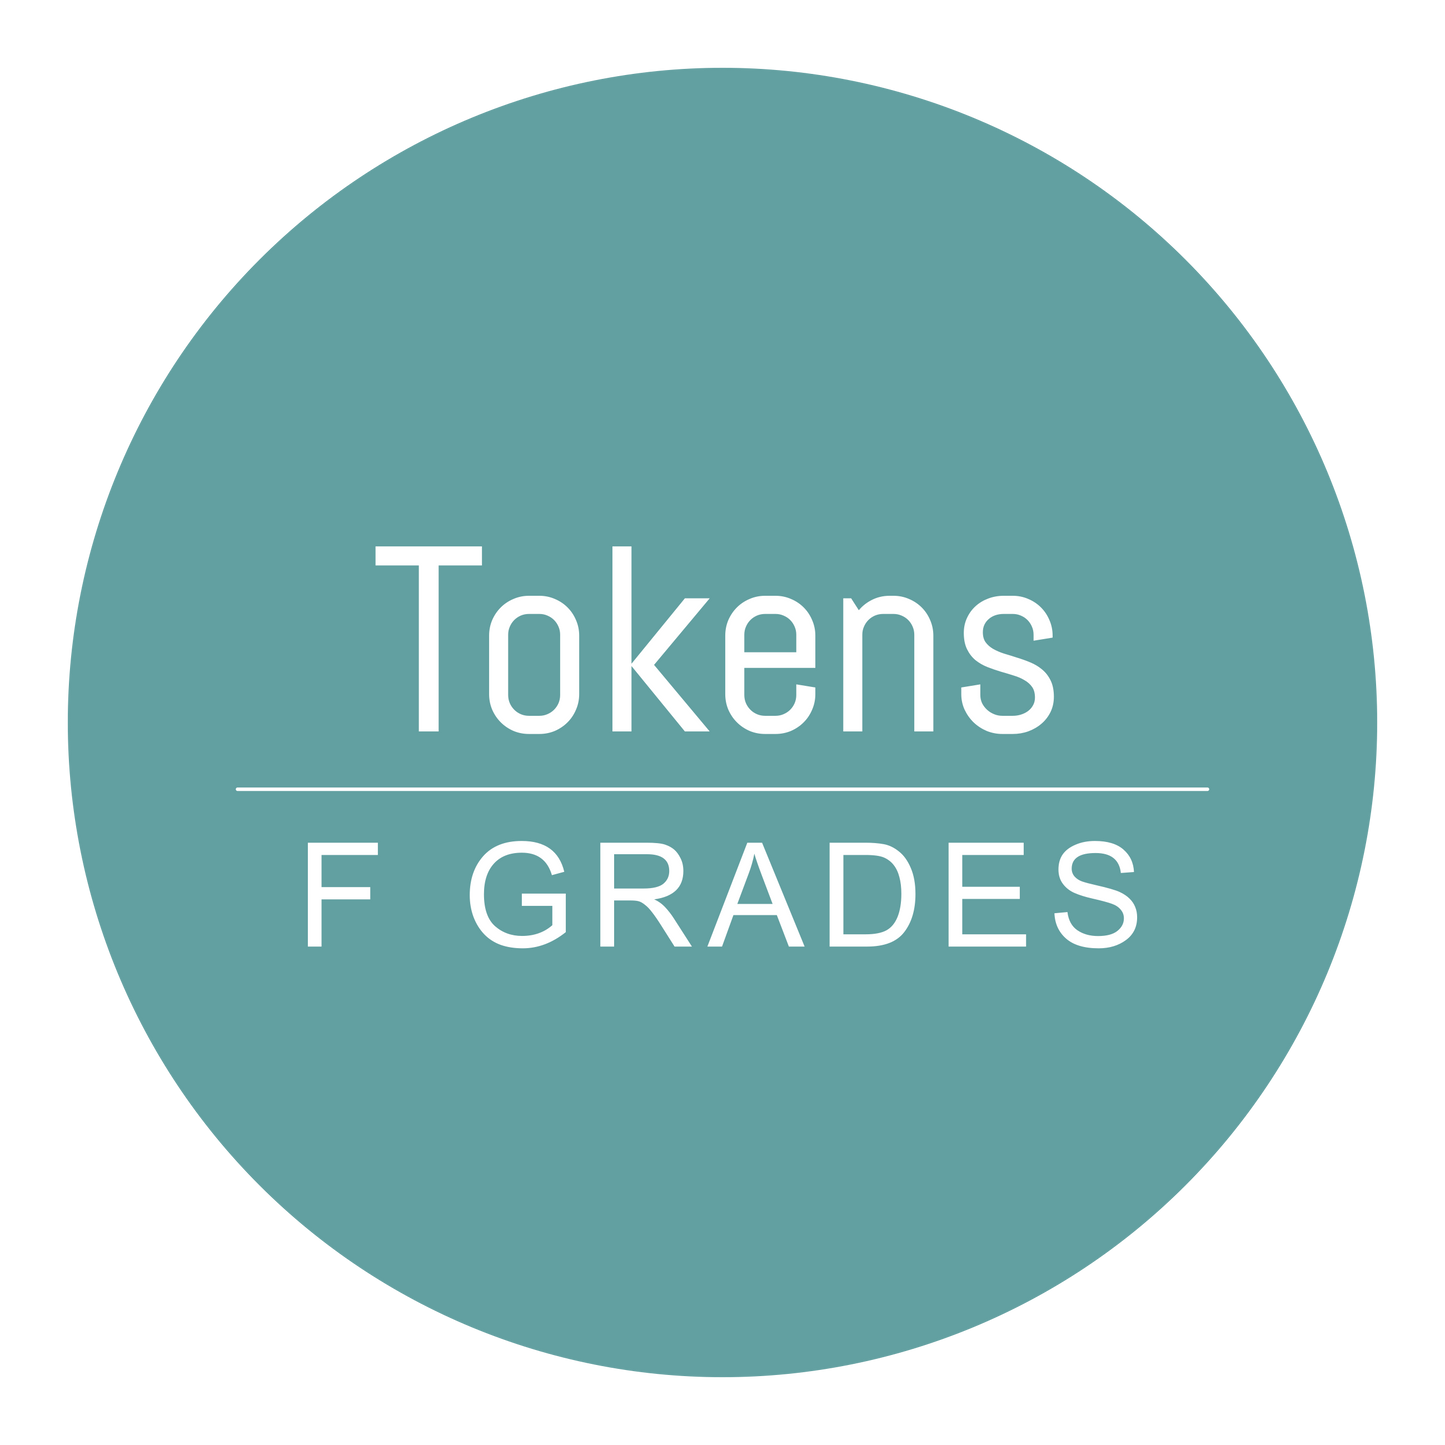 F grades - Tokens